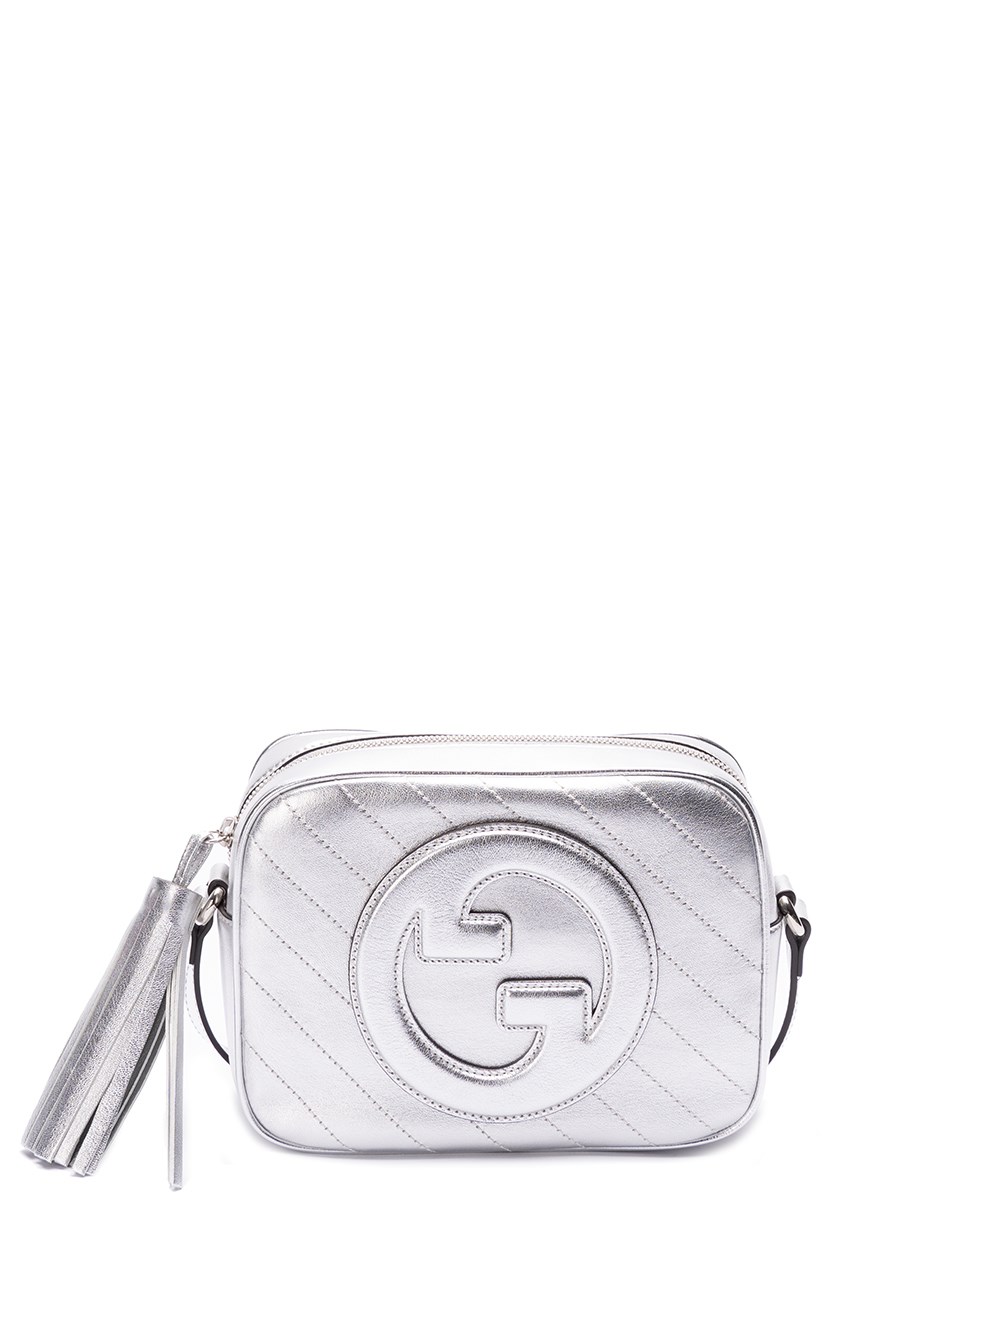 Gucci Blondie` Small Shoulder Bag In Metallic